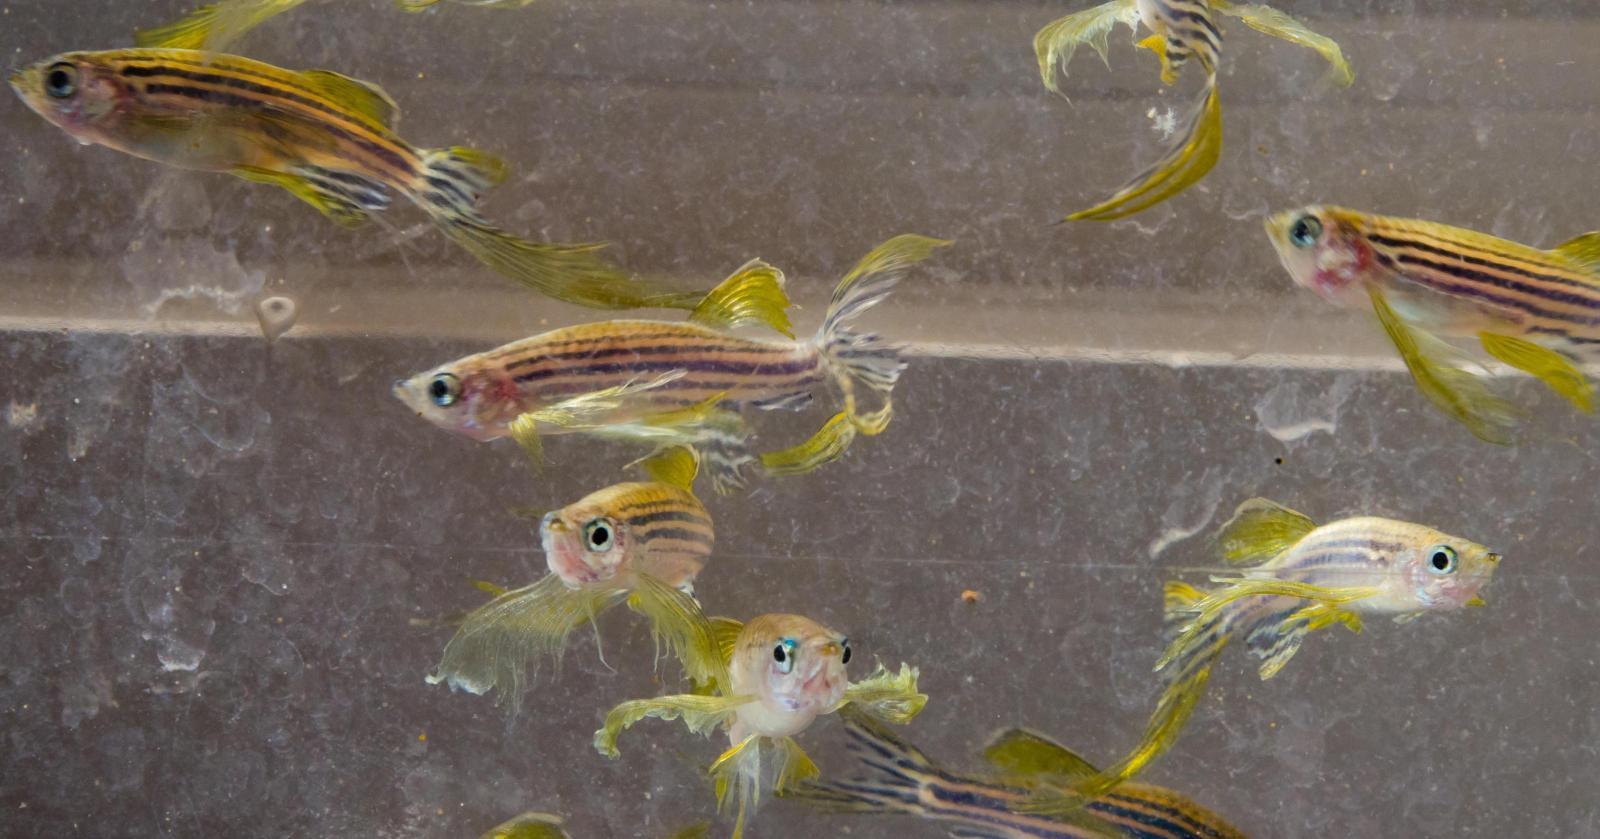 small striped fish in a tank